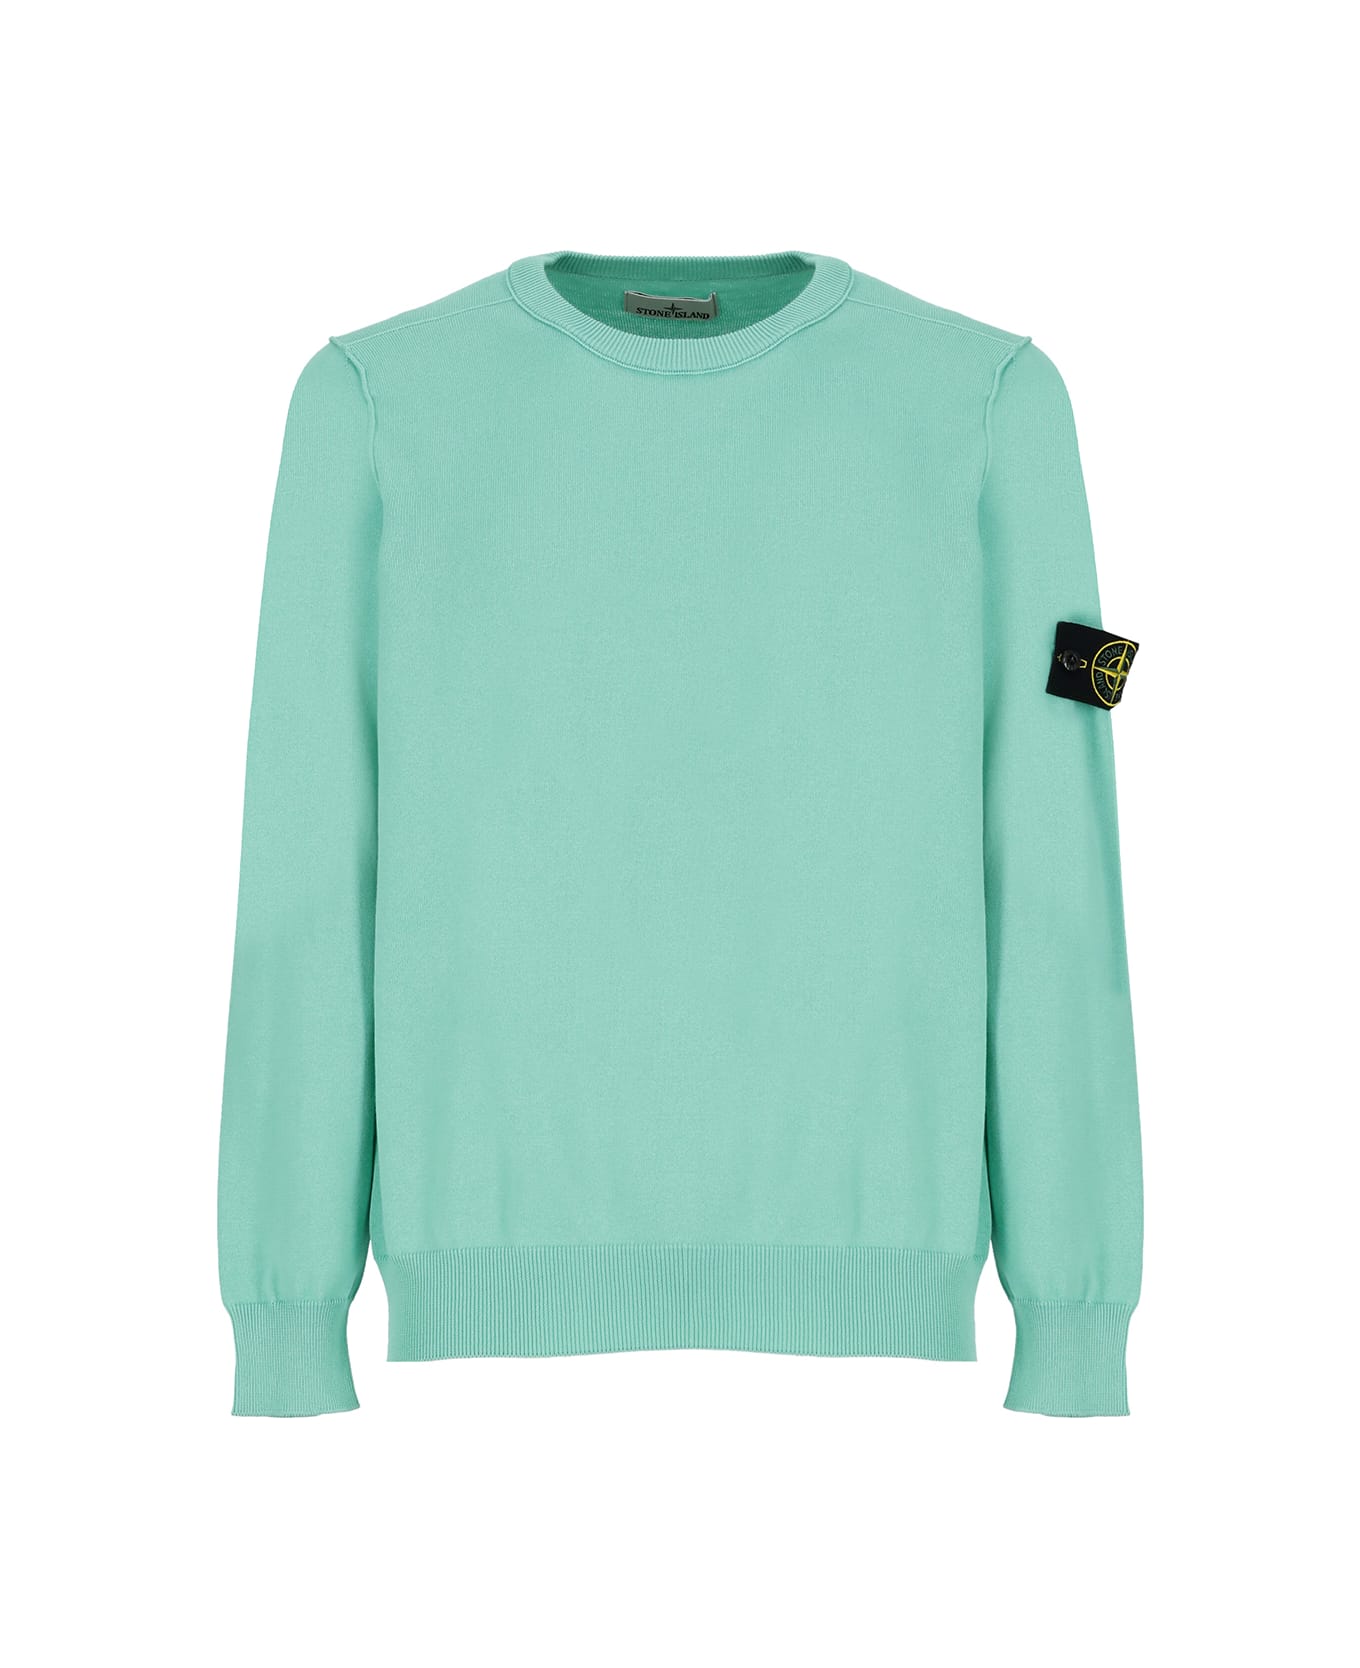 Stone Island Cotton Sweater - Green ニットウェア